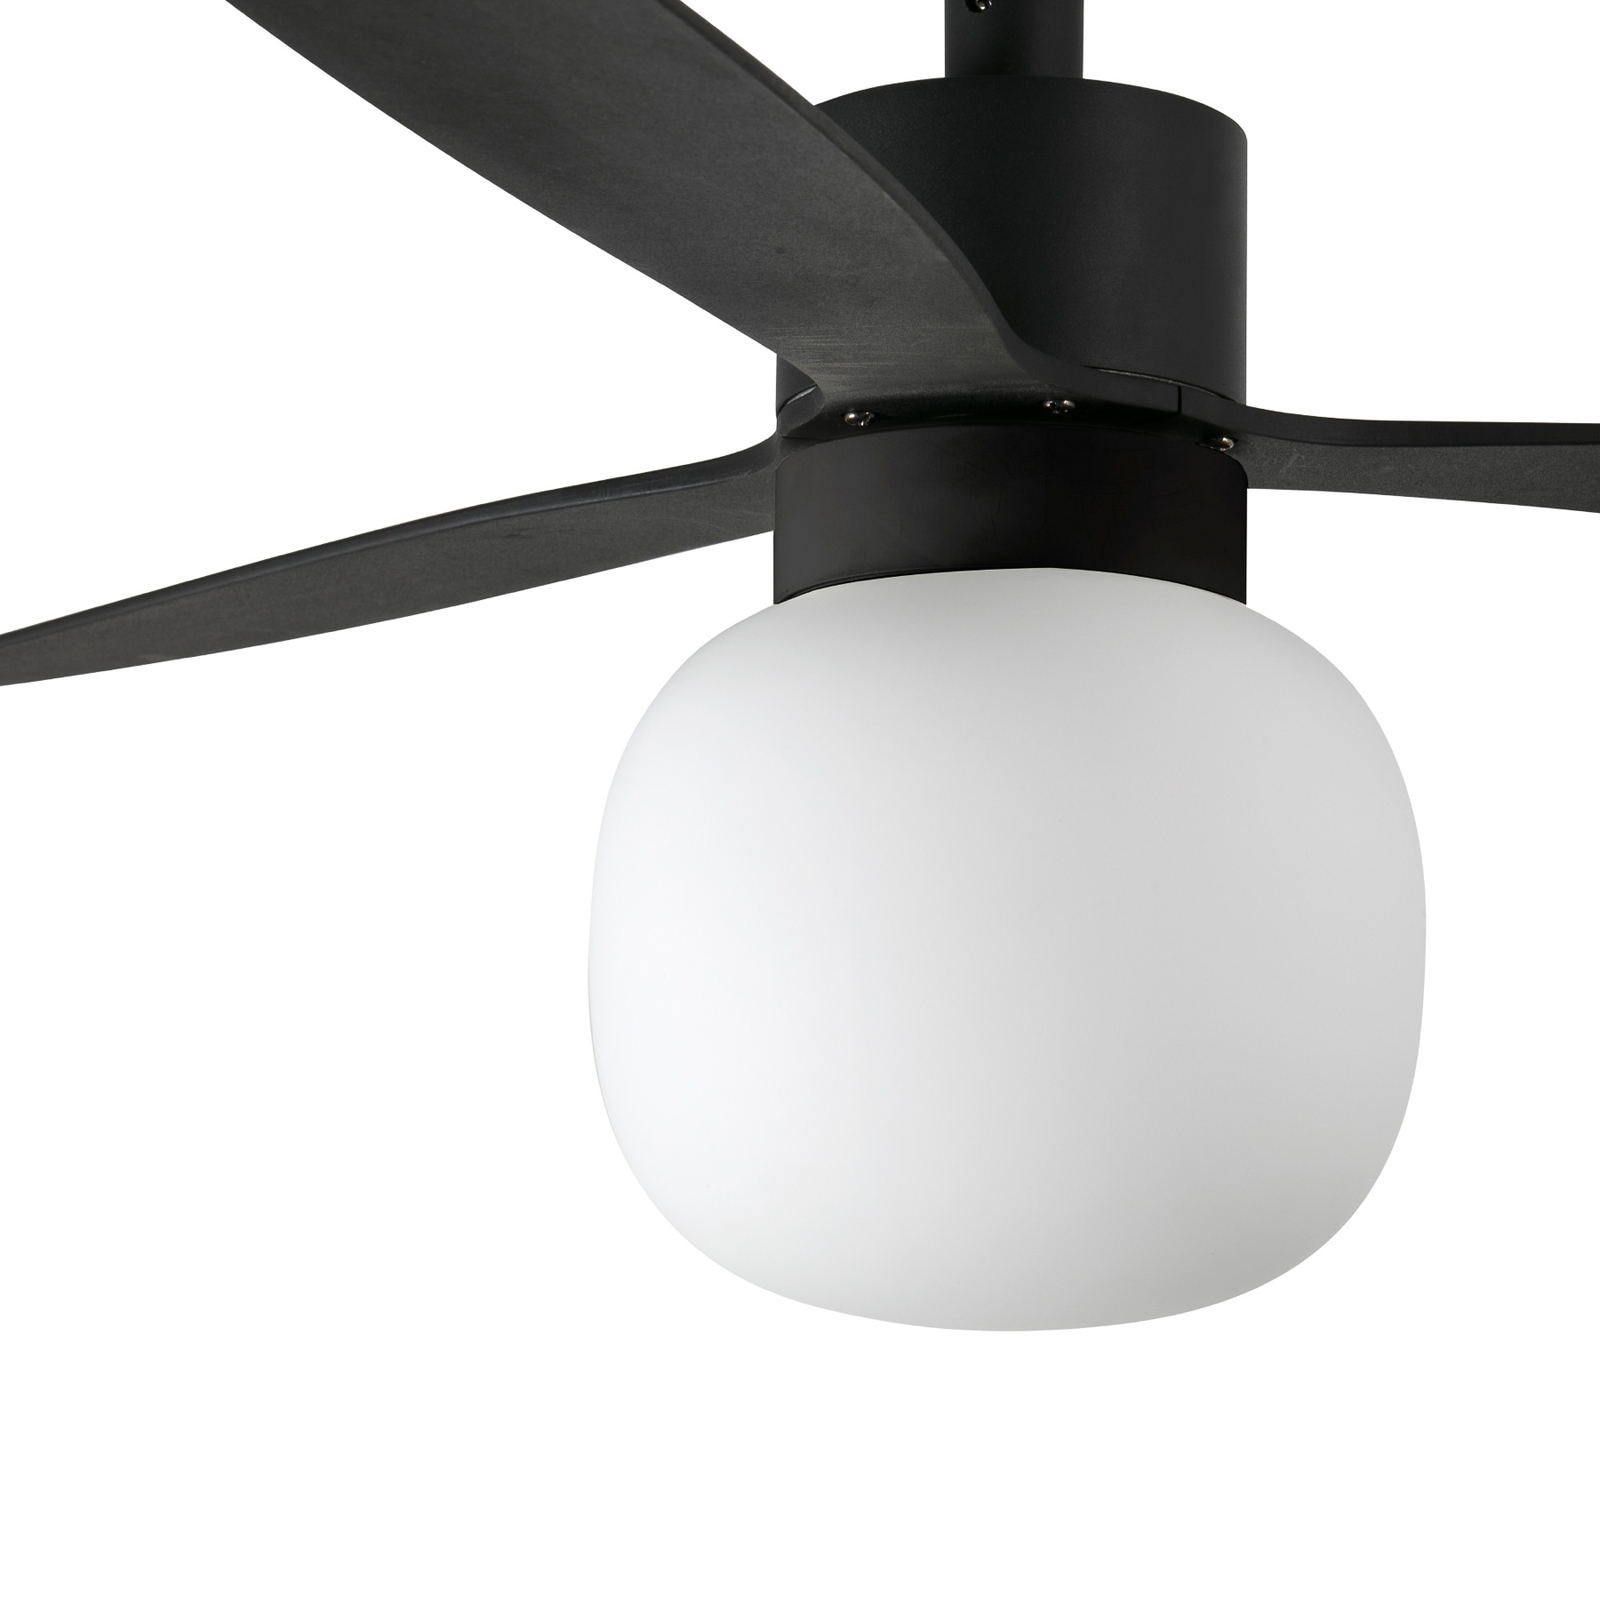 Amelia Ball ceiling fan, LED light, black